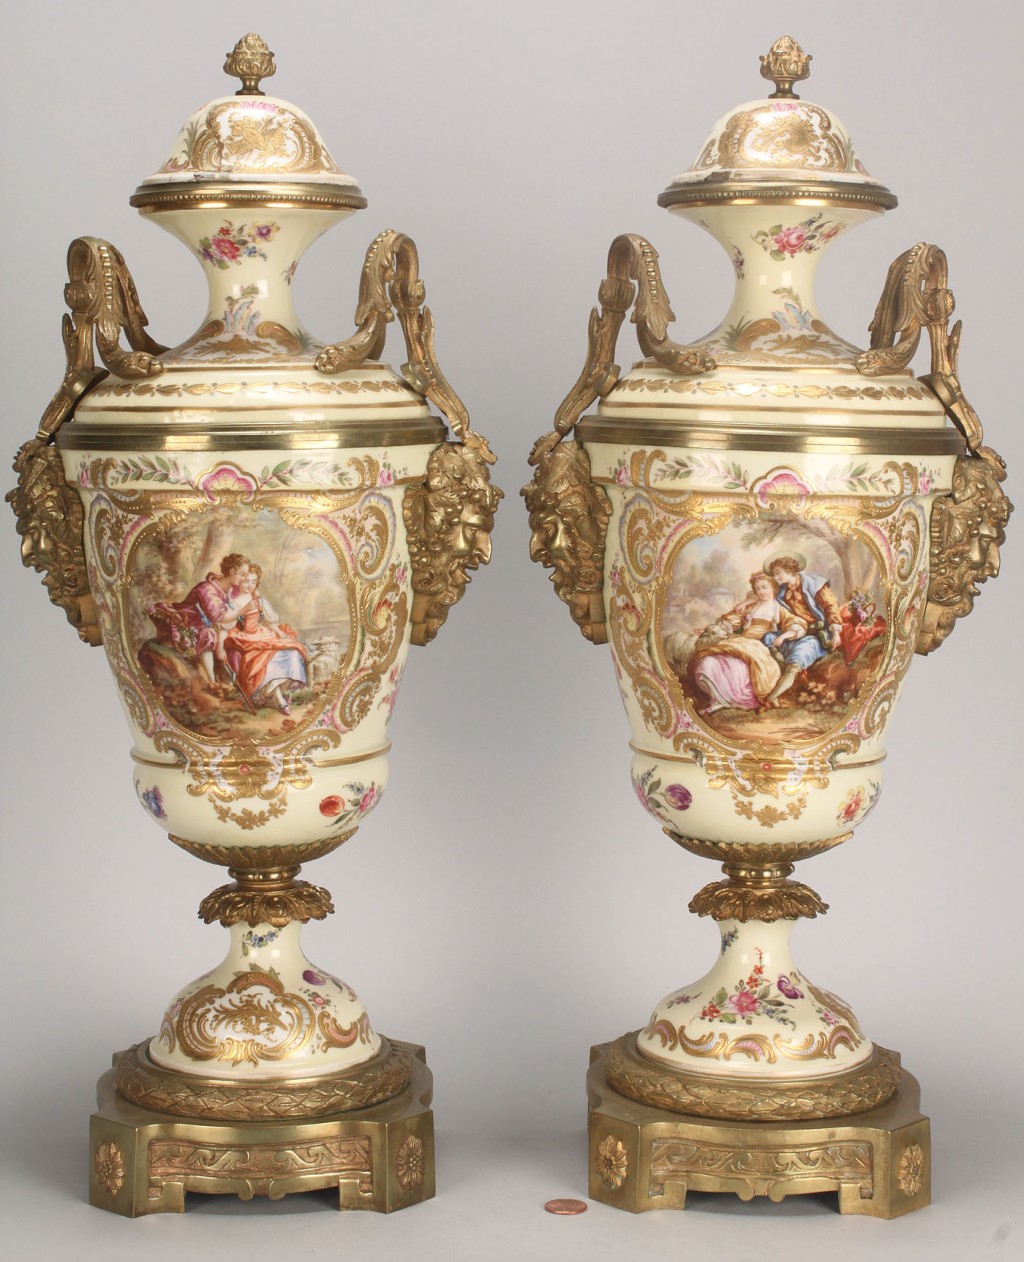 Lot 106: Pair of Sevres Ormolu Urns, 19th century